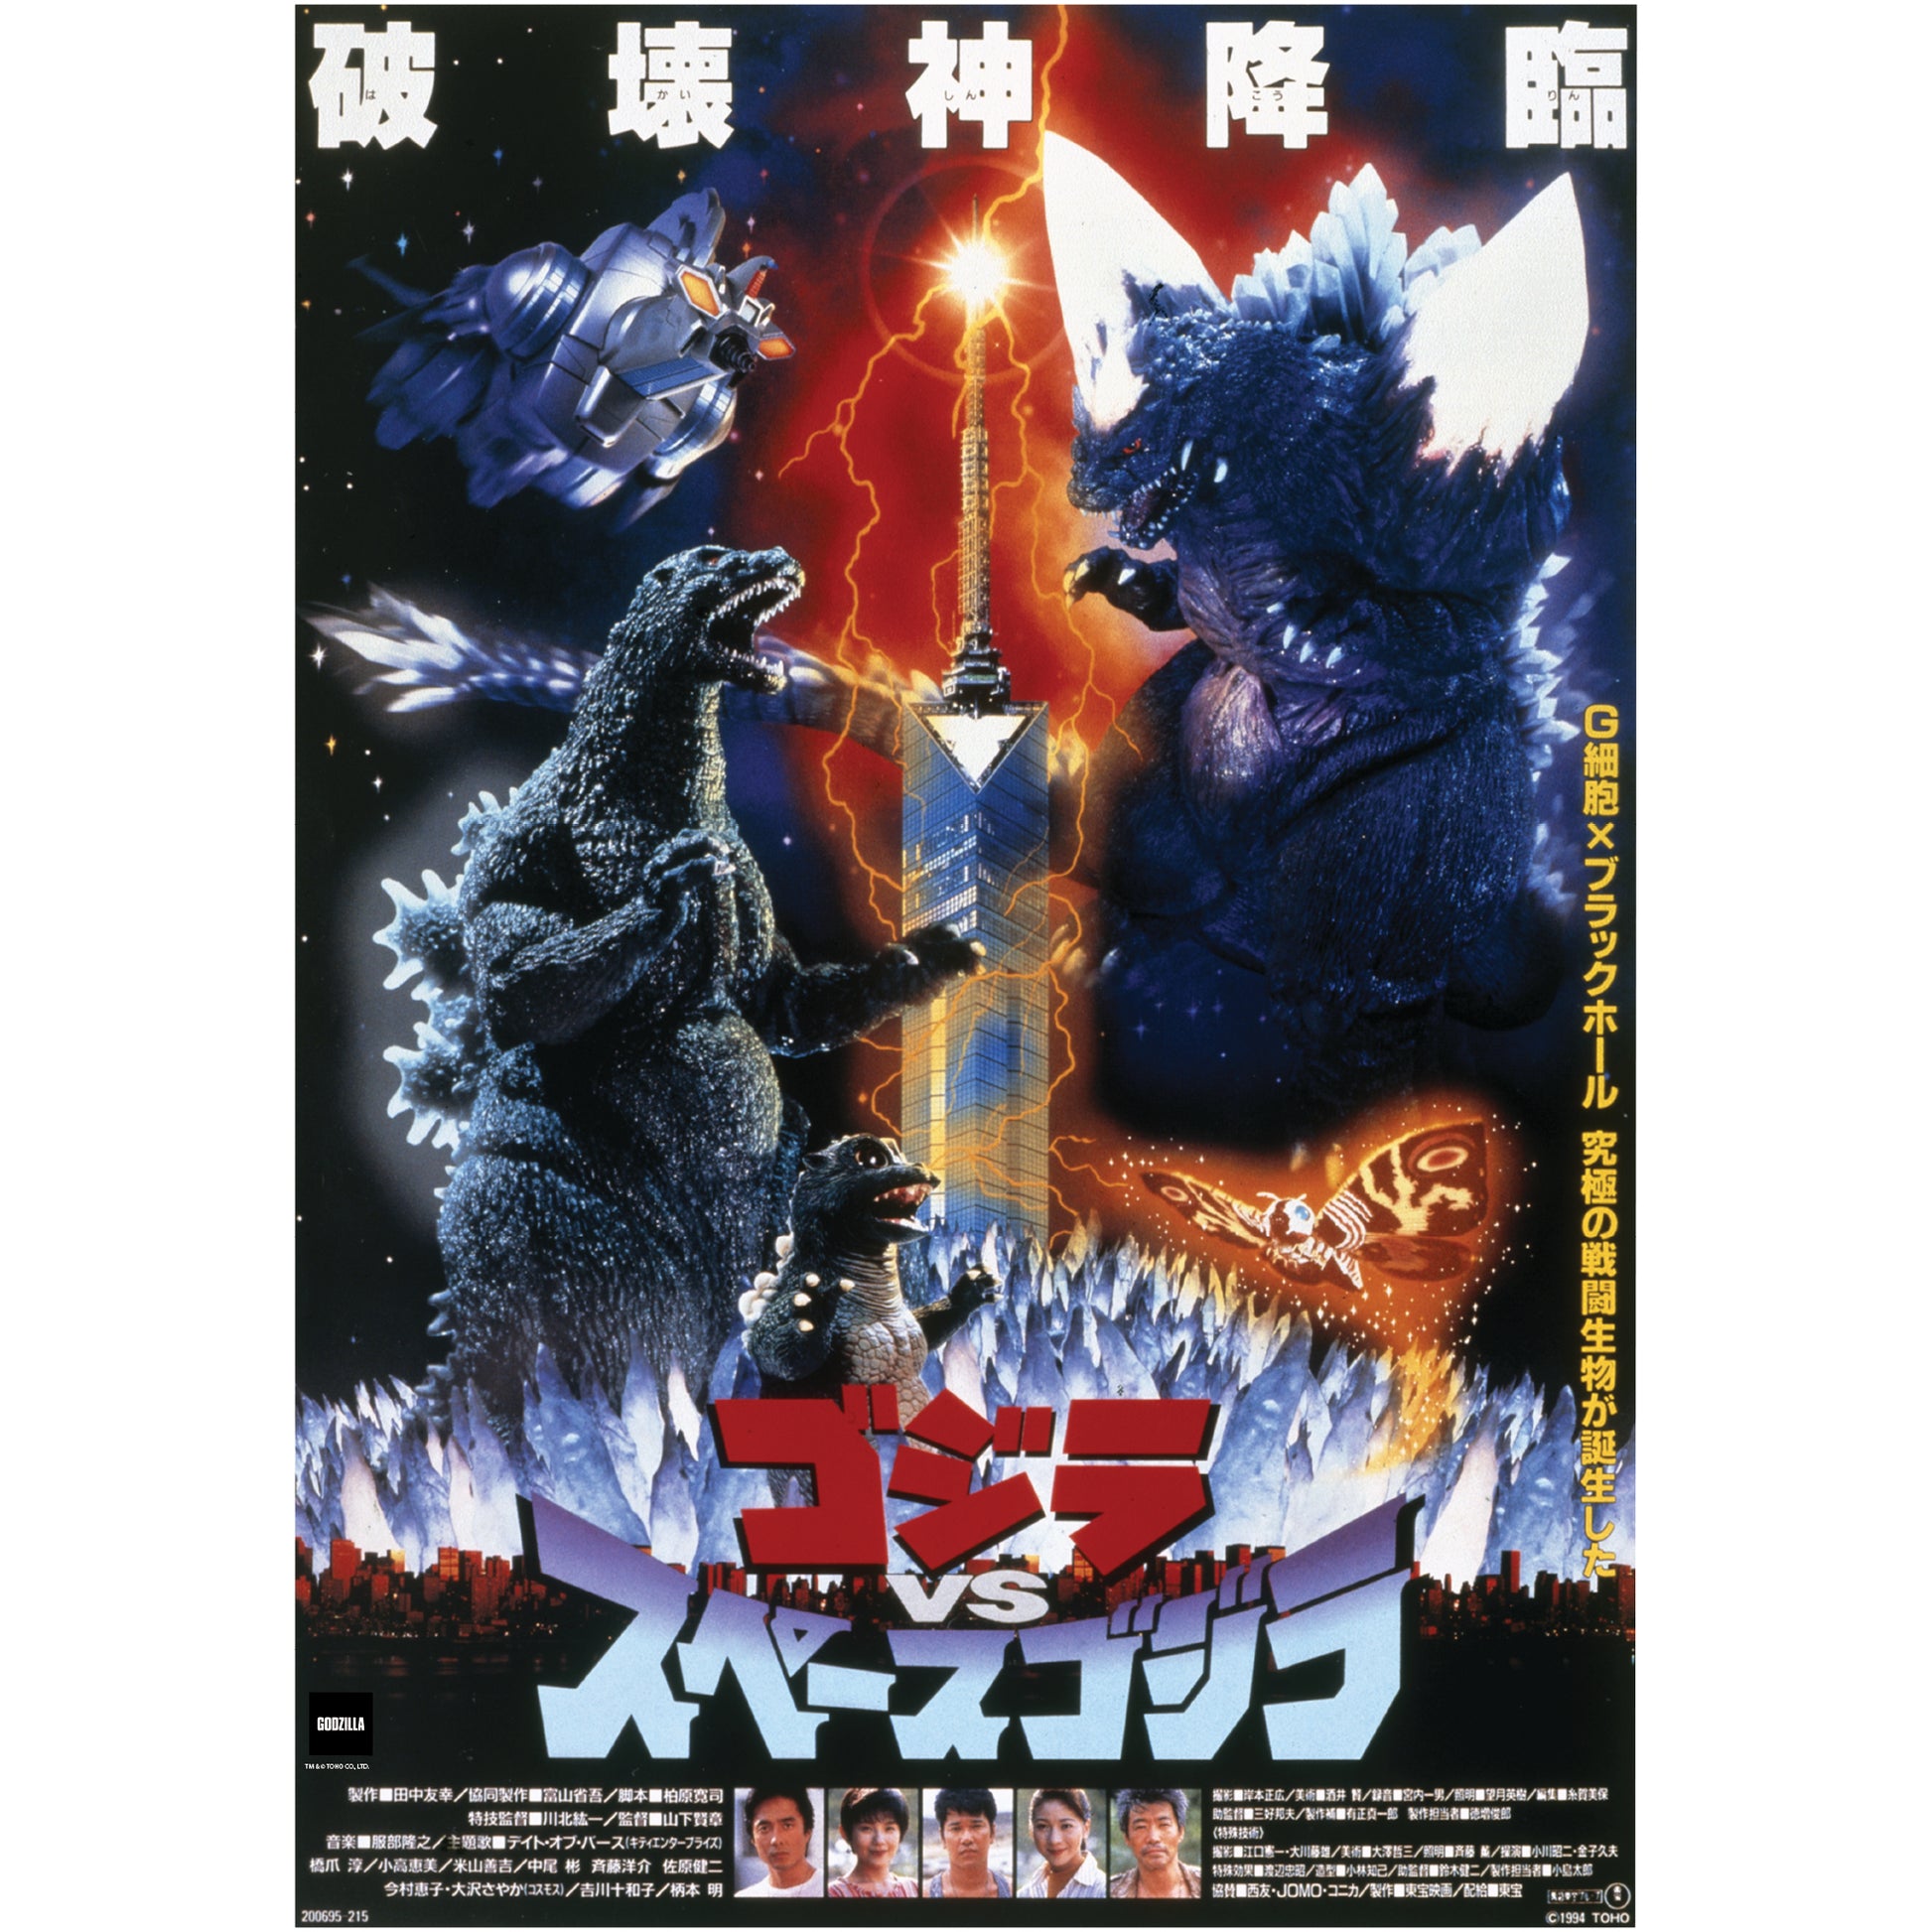 Godzilla Godzilla Vs Space Godzilla 1994 Movie Poster Mural Offic Fathead